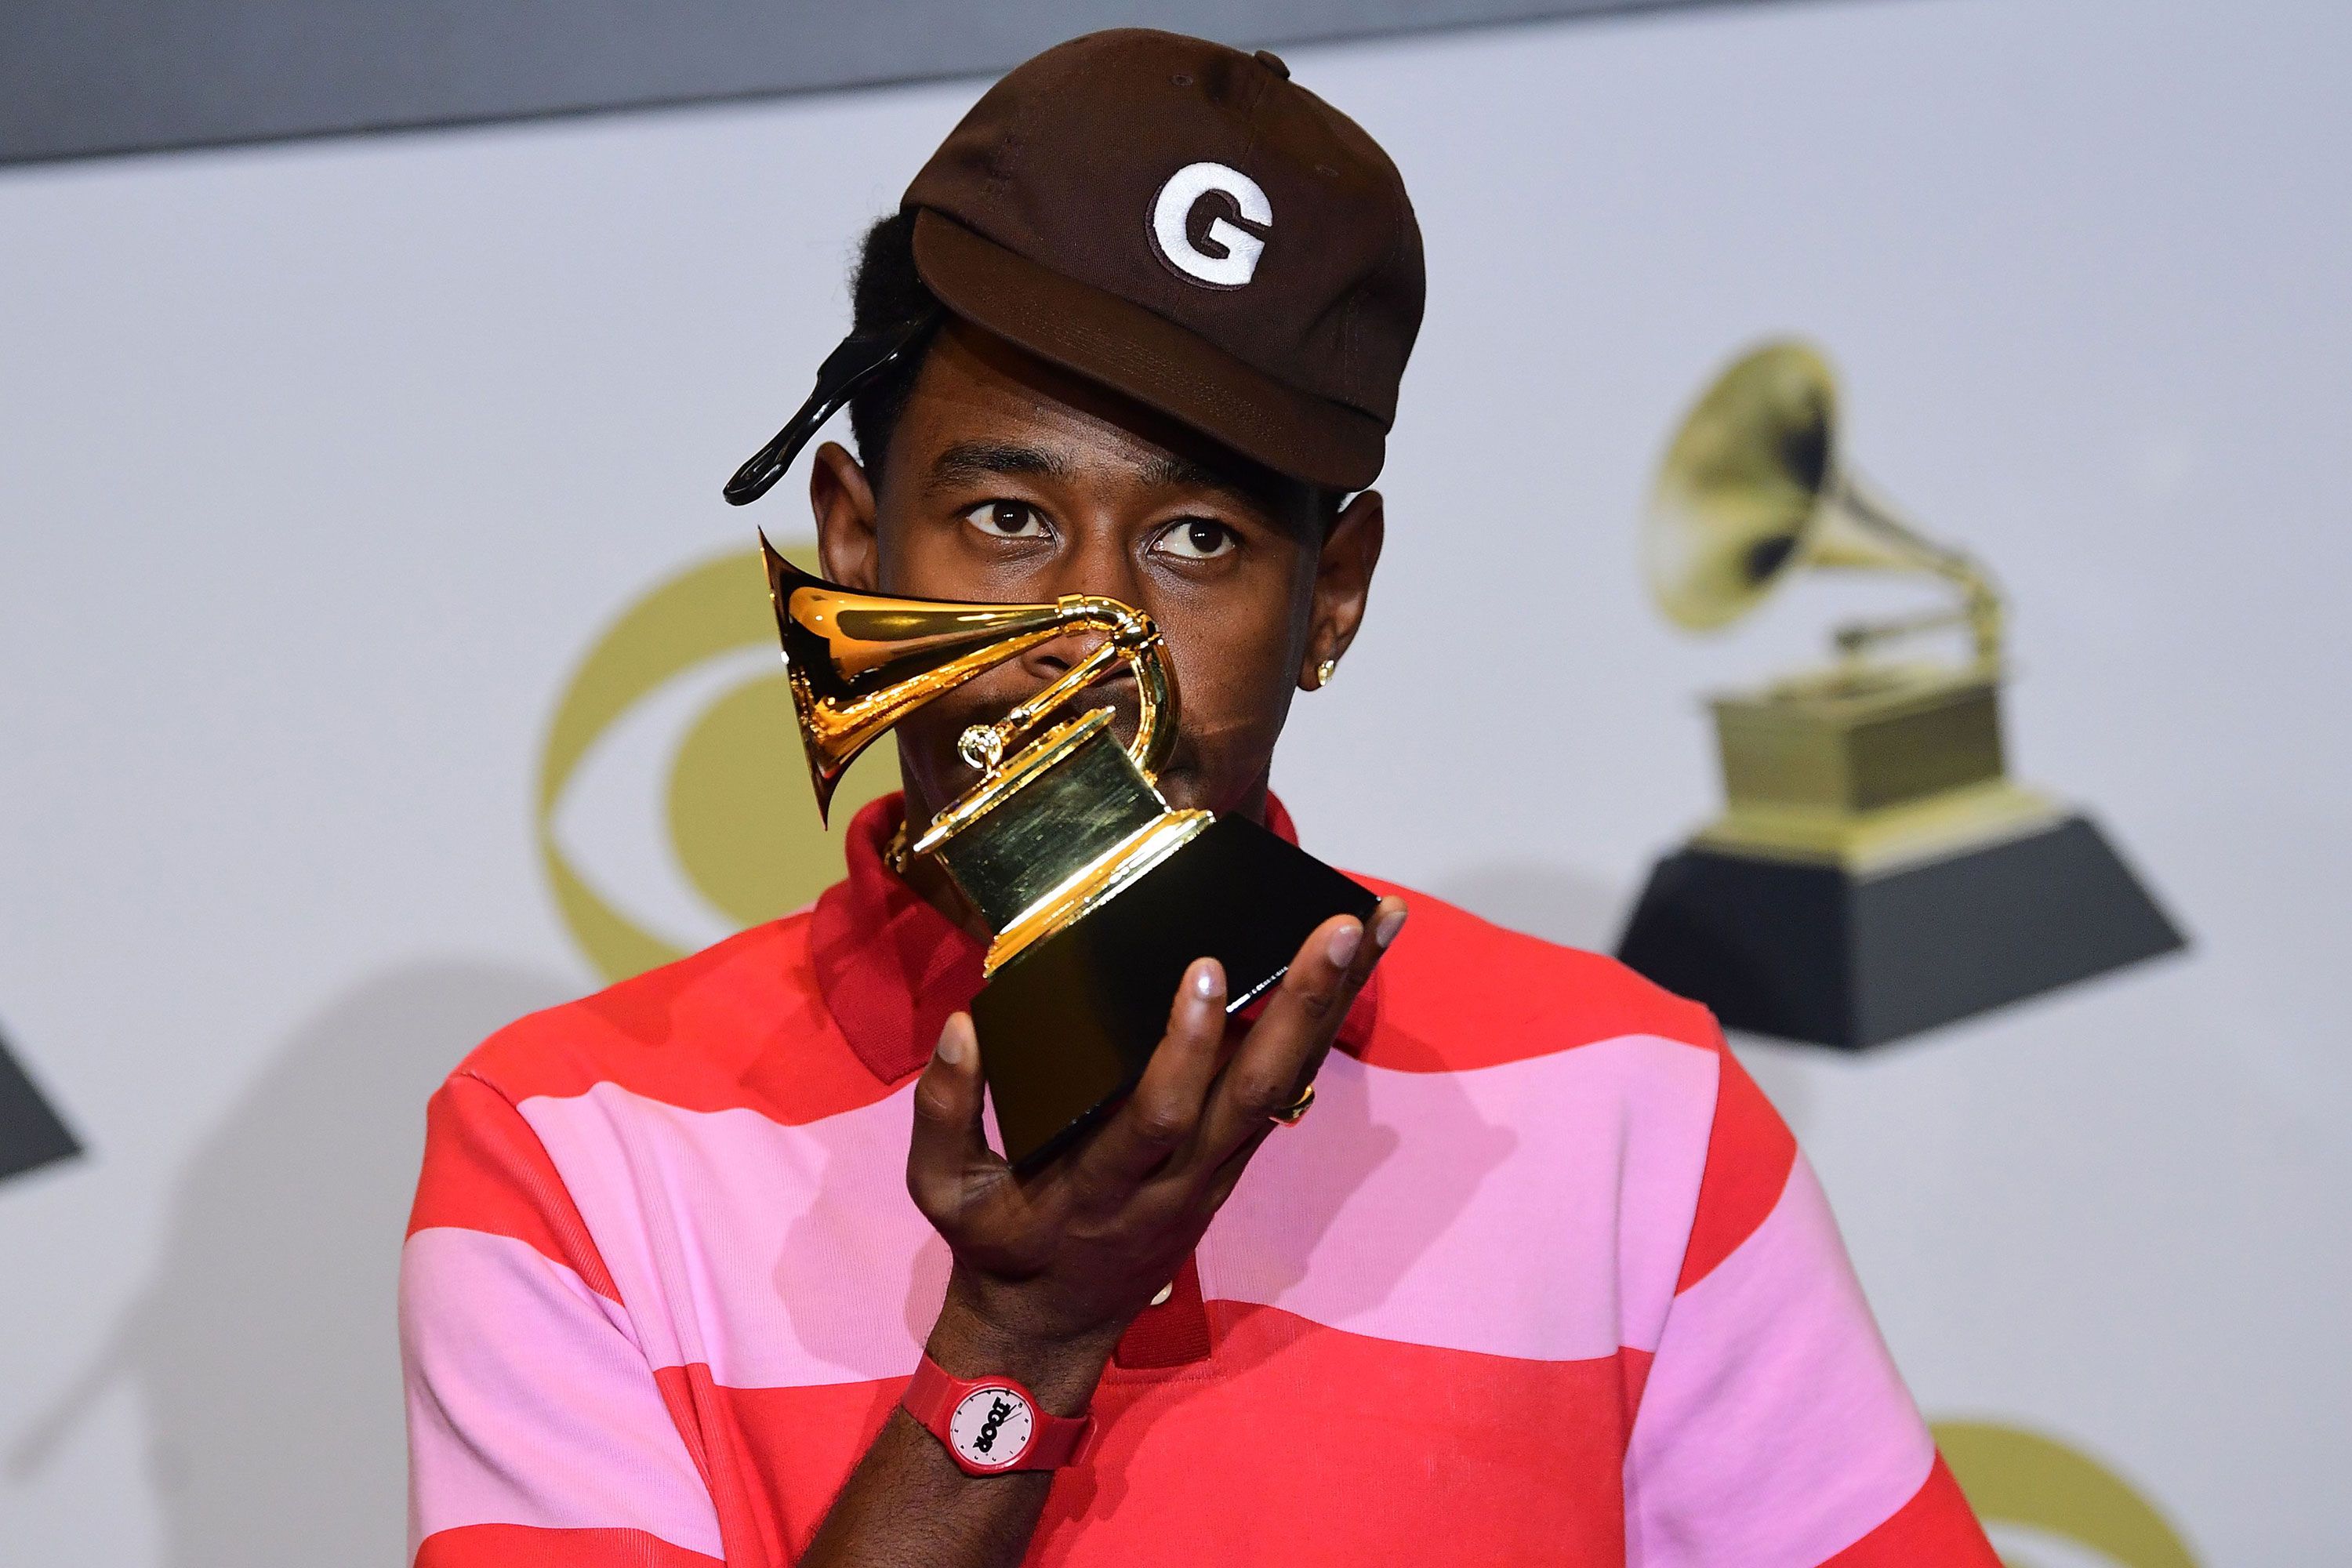 Grammys 2020: Tyler the Creator Criticizes Rap Album Win